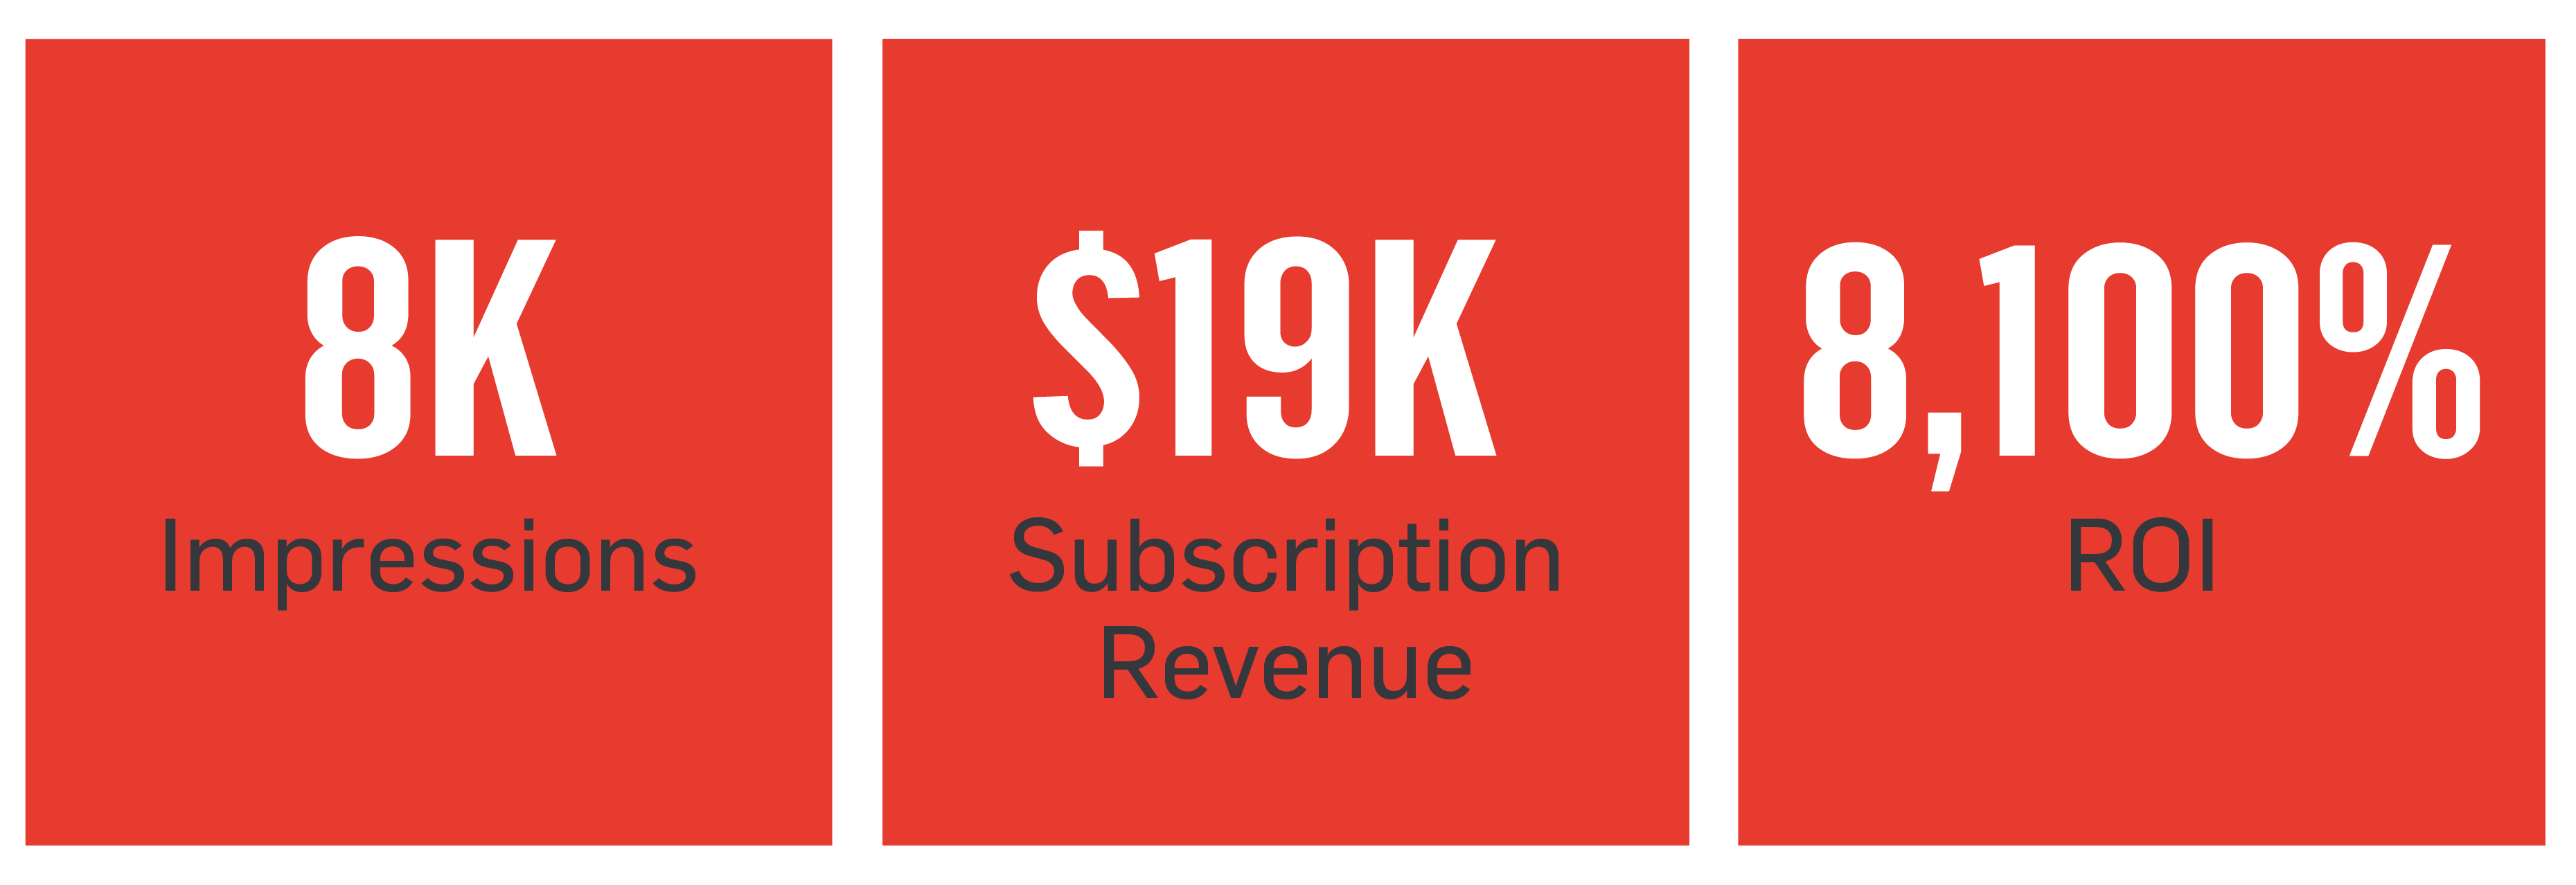 8k impressions $19k subscription revenue 8,100% ROI